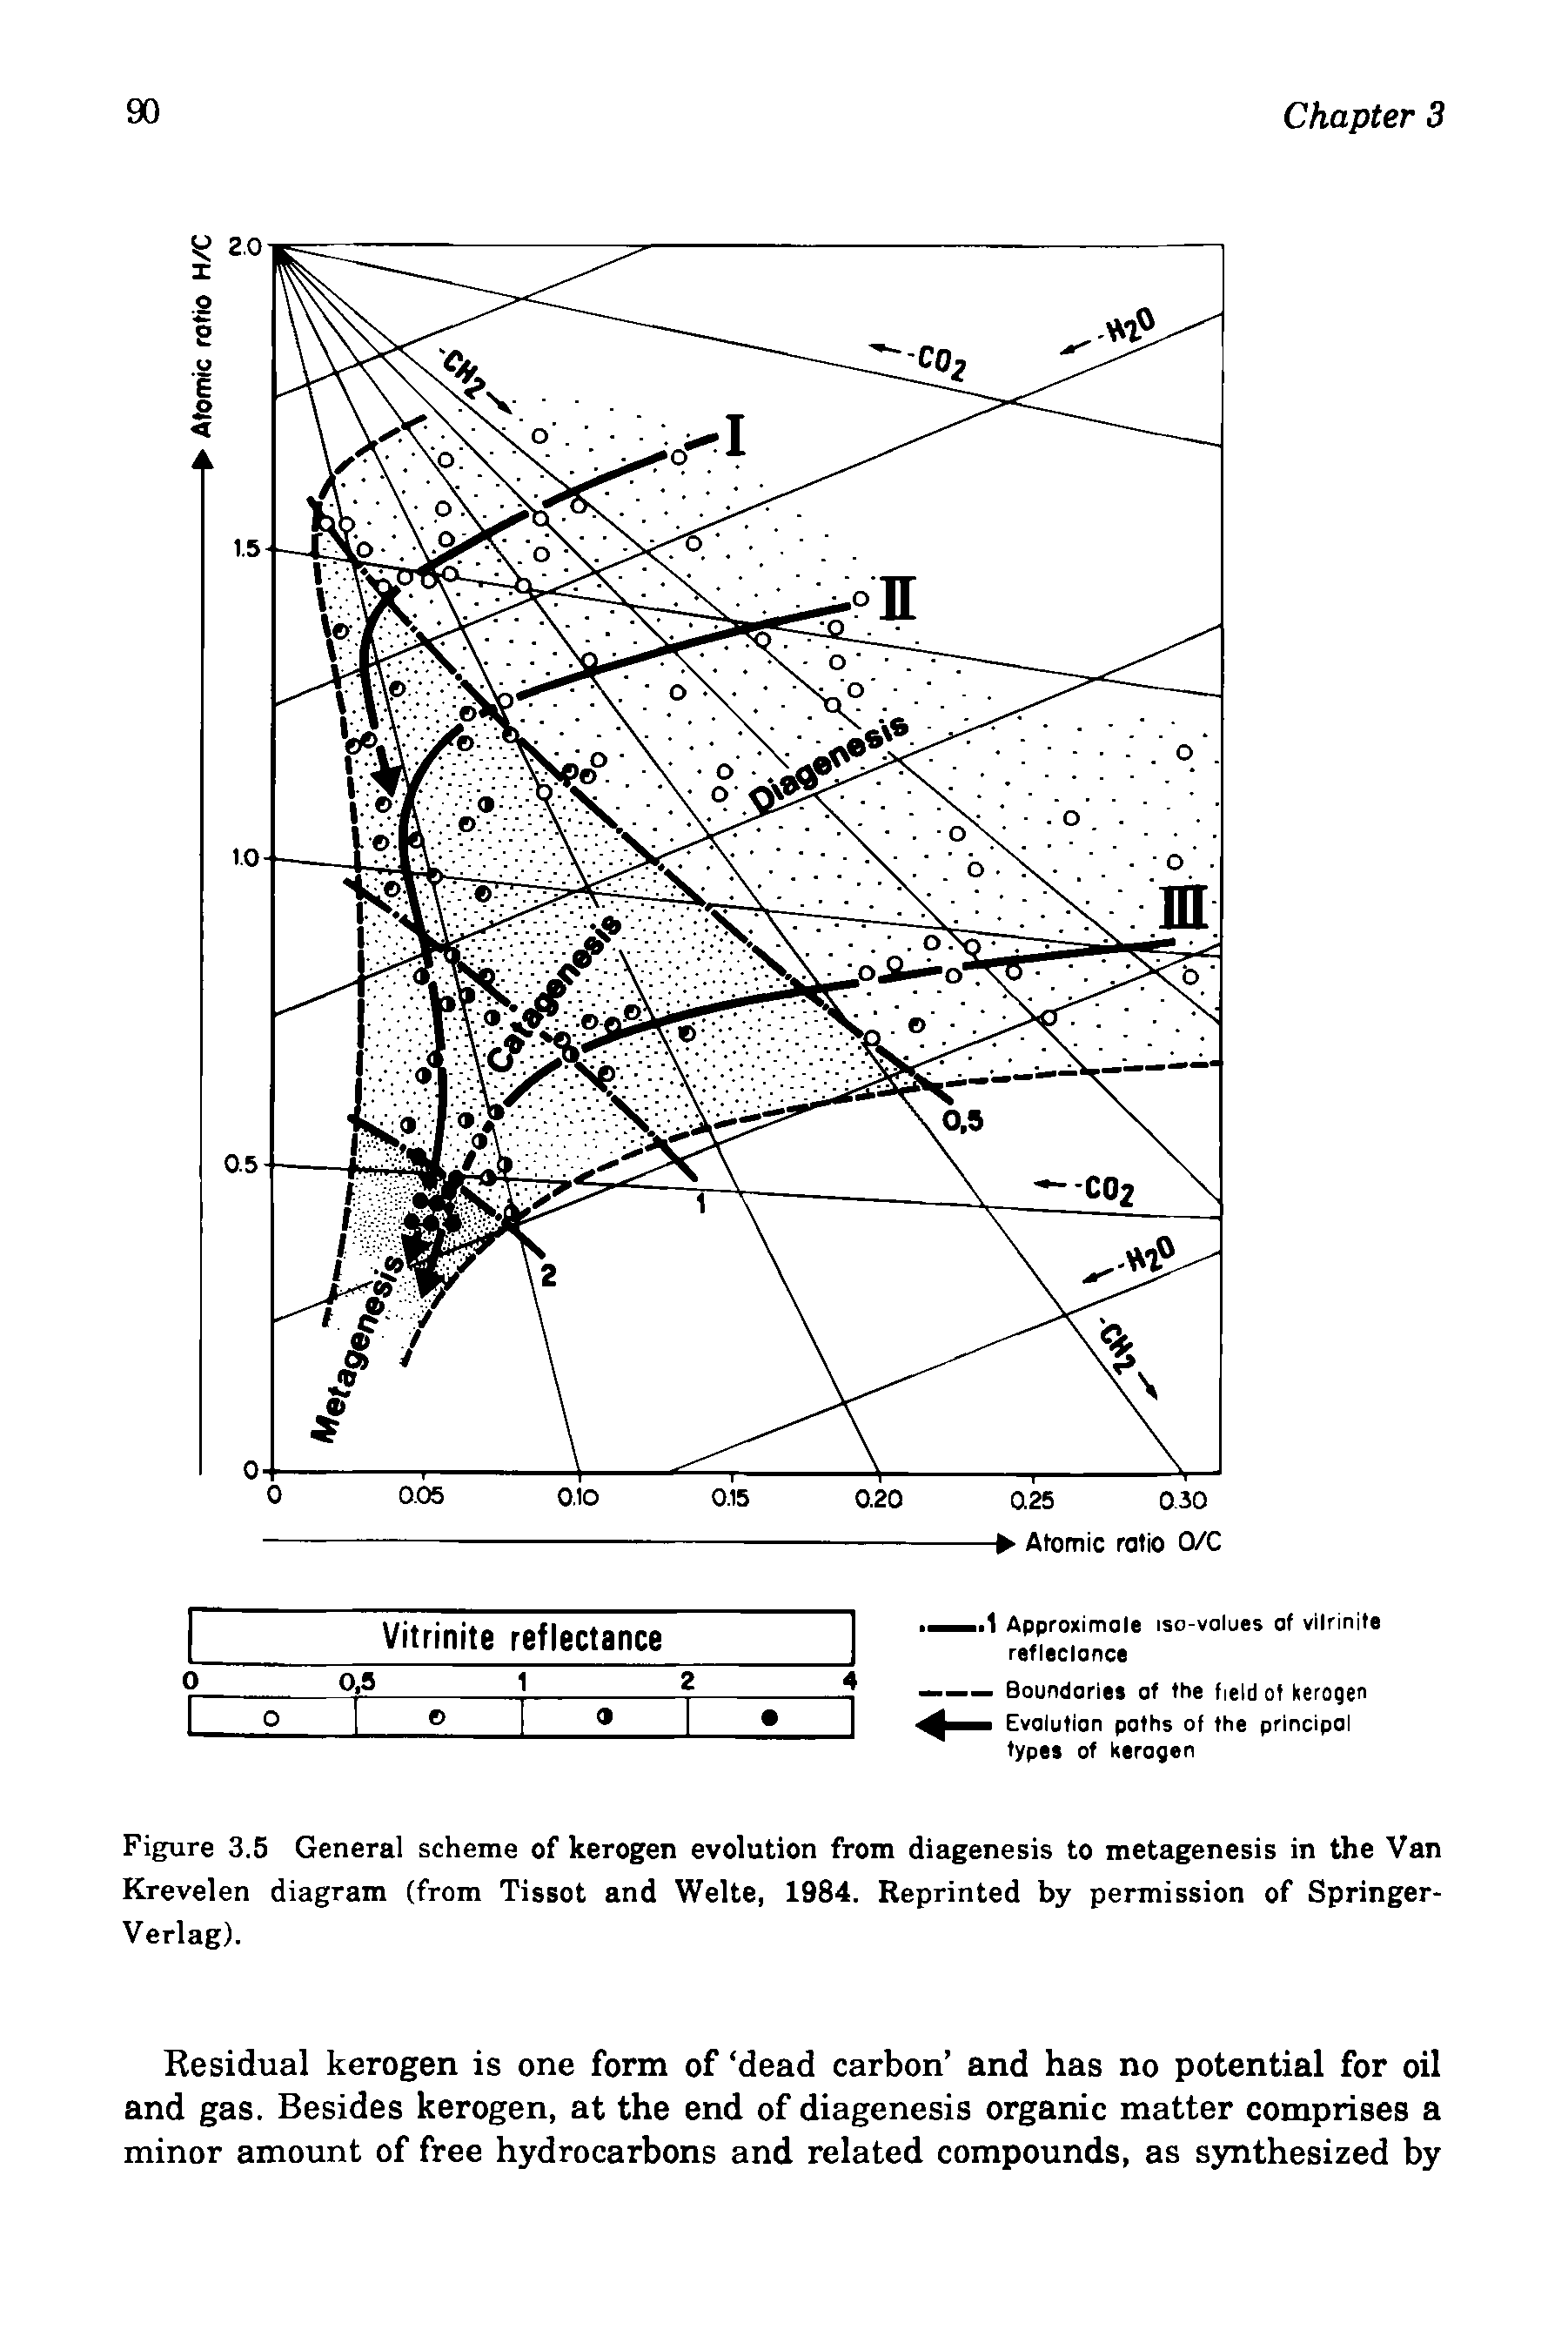 Figure 3.5 General scheme of kerogen evolution from diagenesis to metagenesis in the Van Krevelen diagram (from Tissot and Welte, 1984. Reprinted by permission of Springer-Verlag).